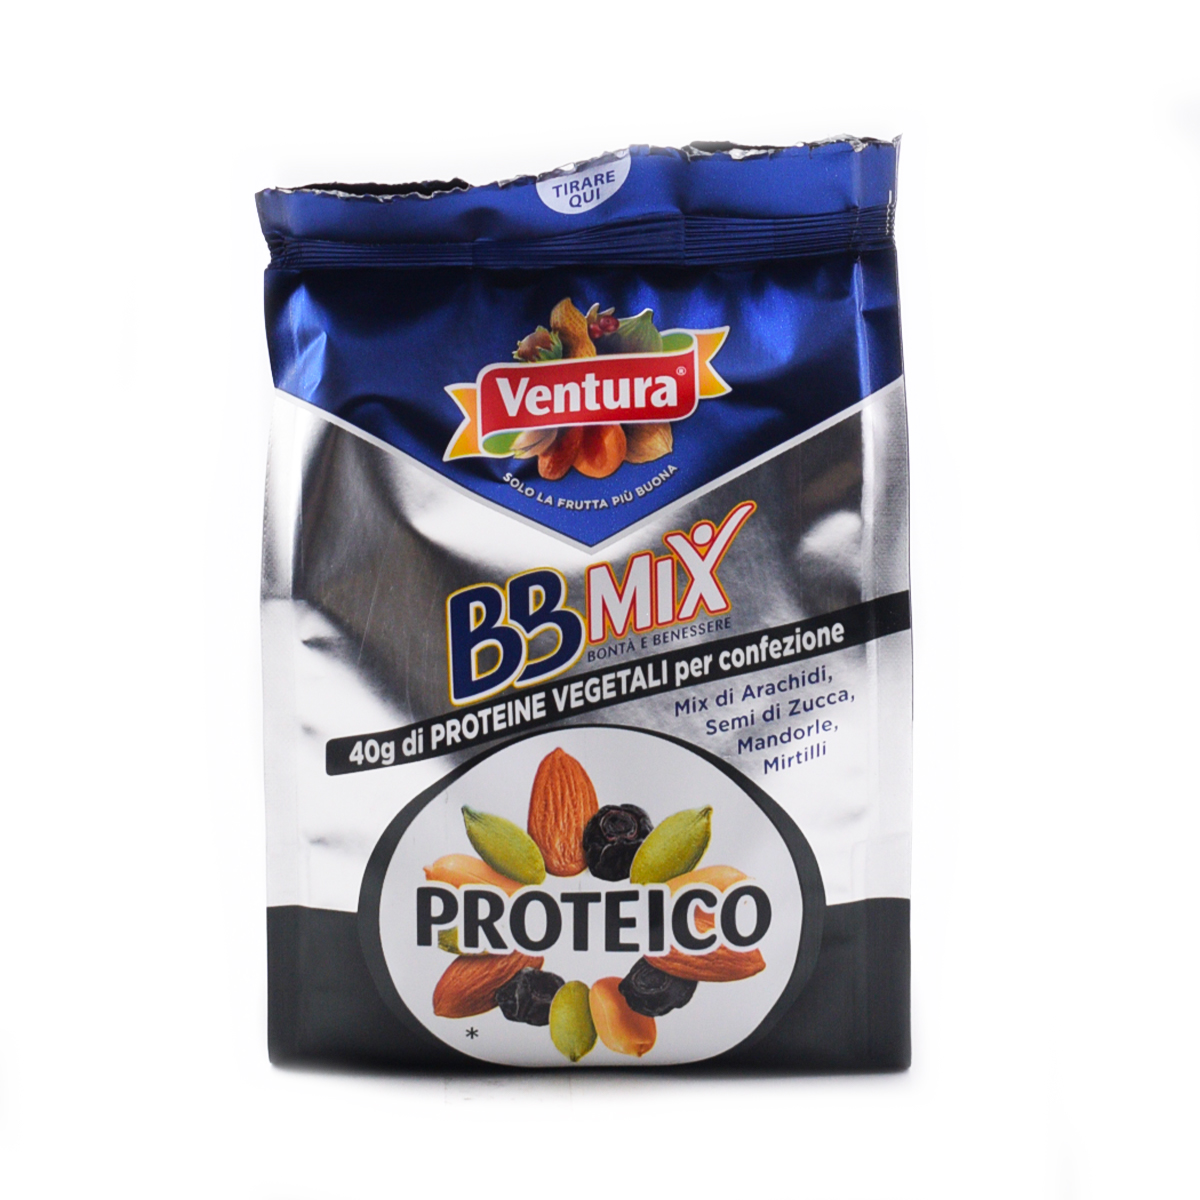 Tumult Due kærlighed Ventura BB Mix Proteico 150g | Paladini Otello Supermercati